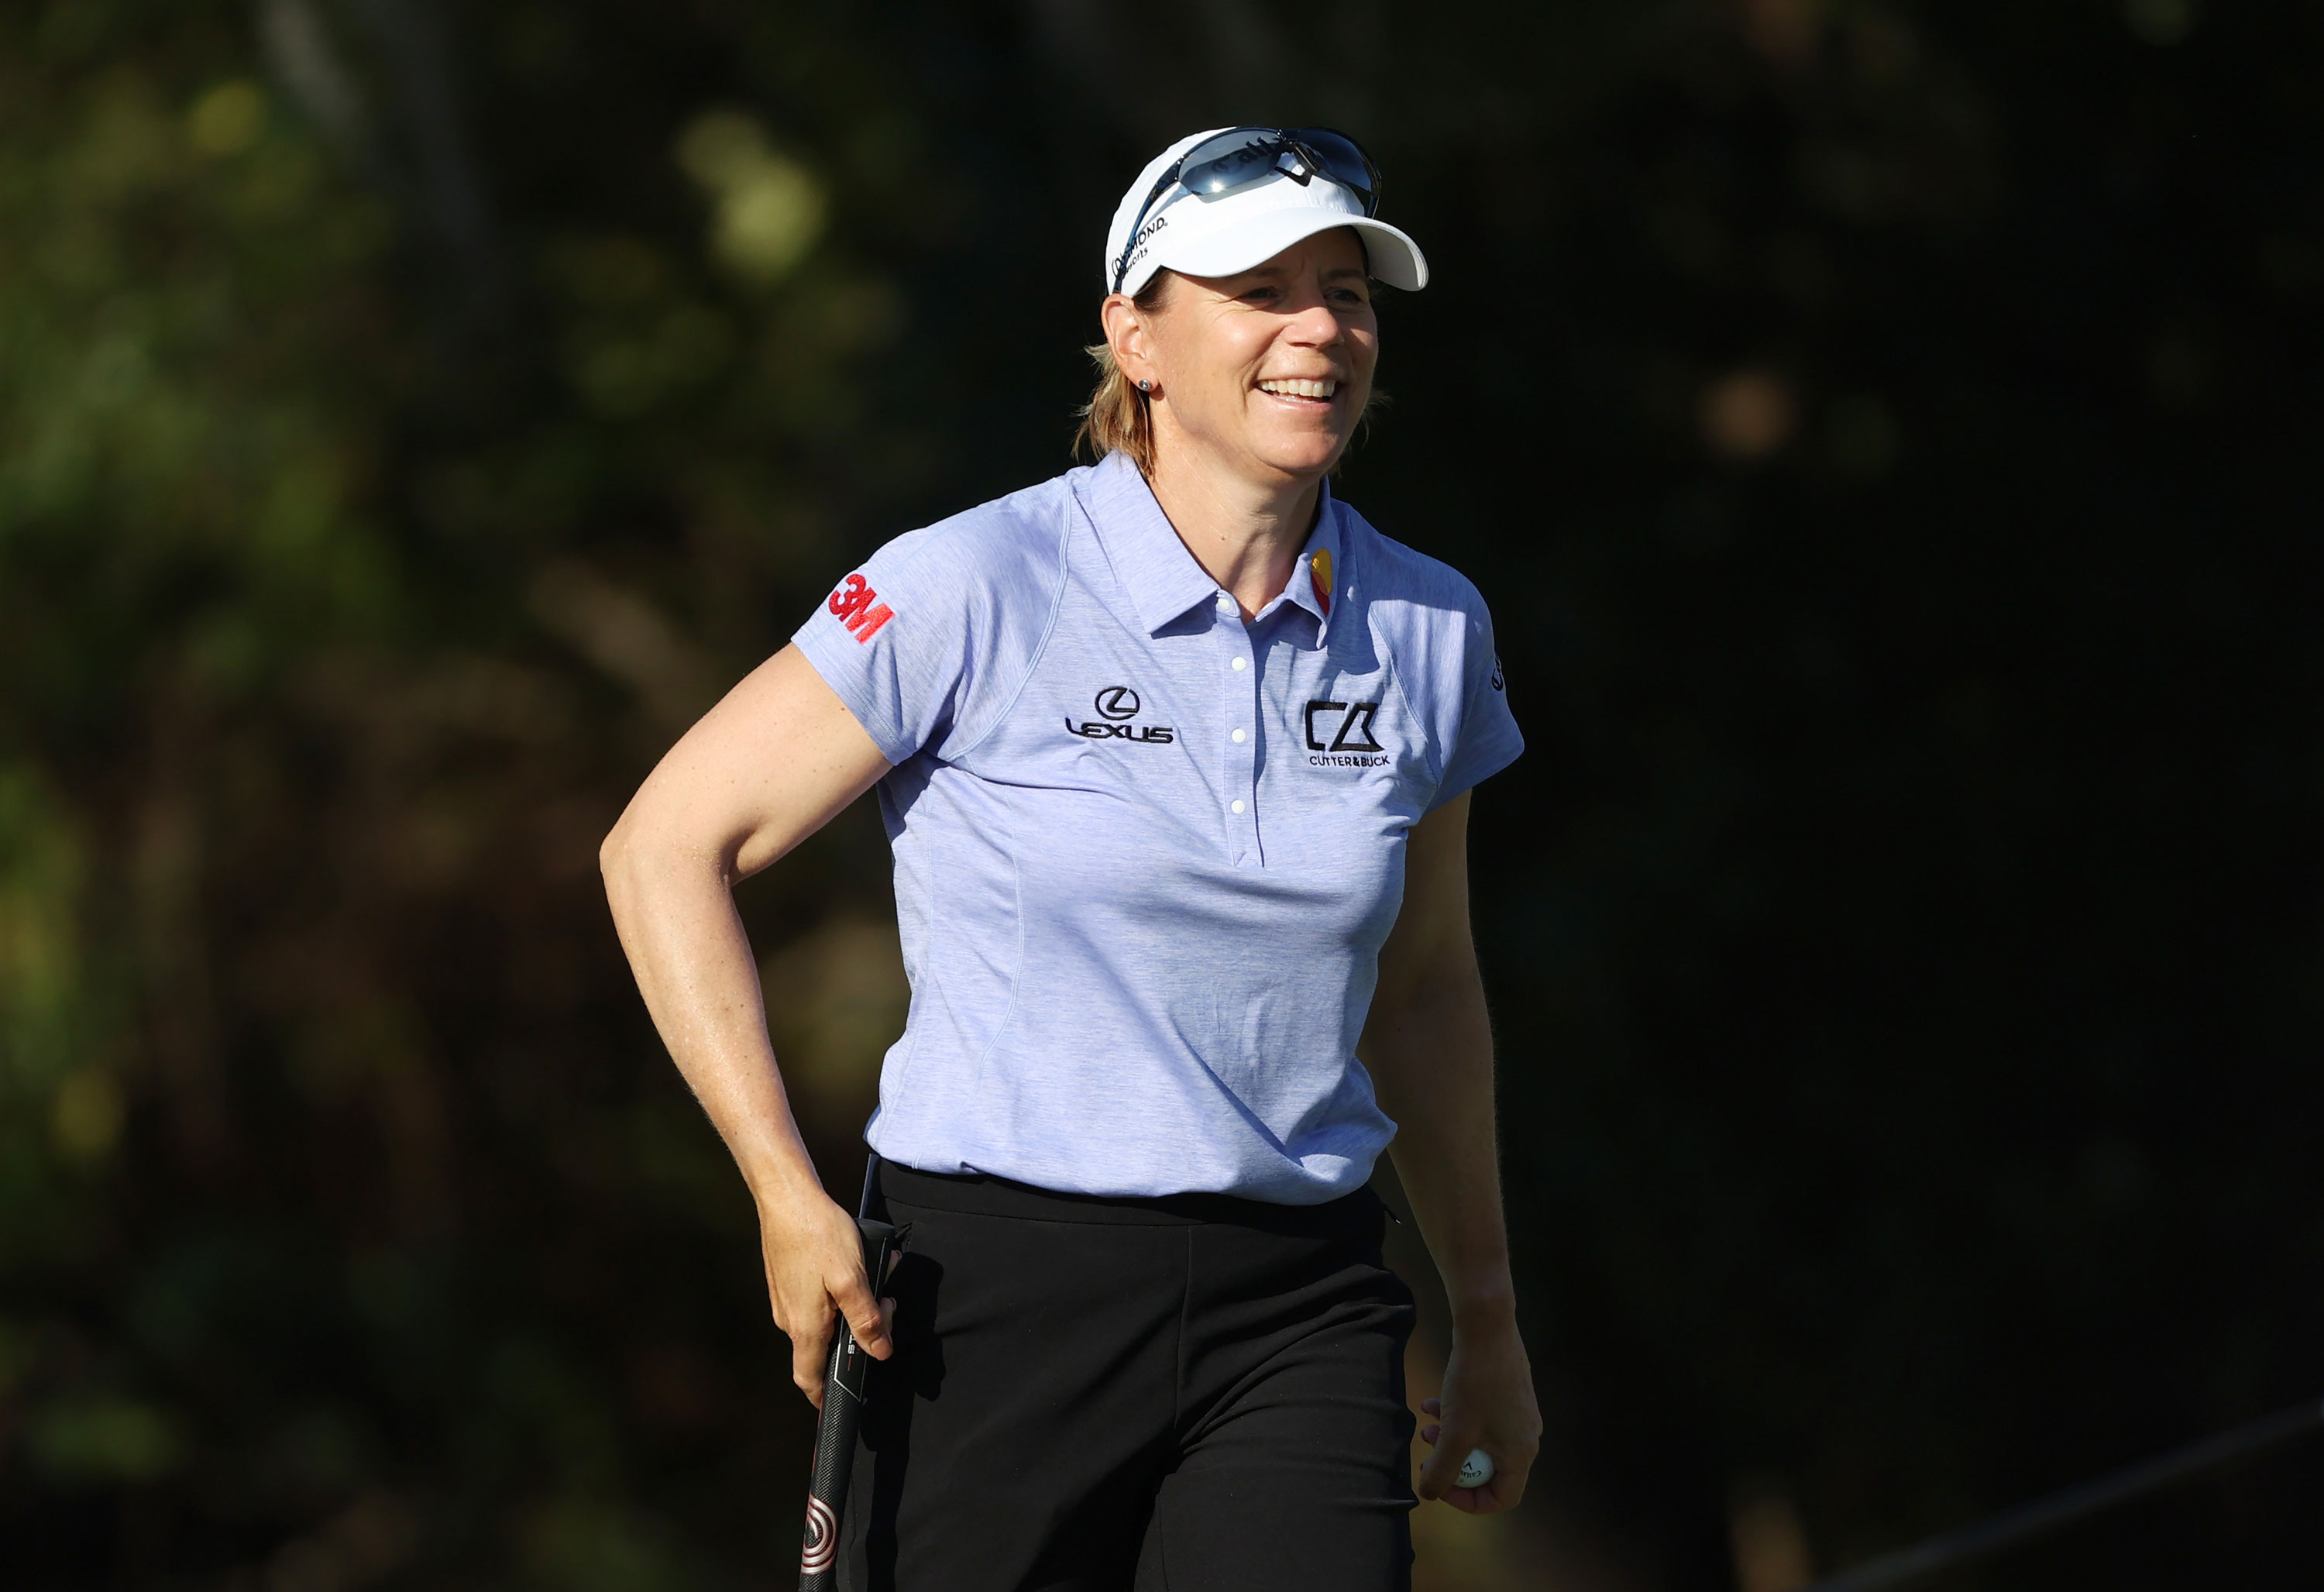 At age 50, Annika Sorenstam fighting to grow women's golf